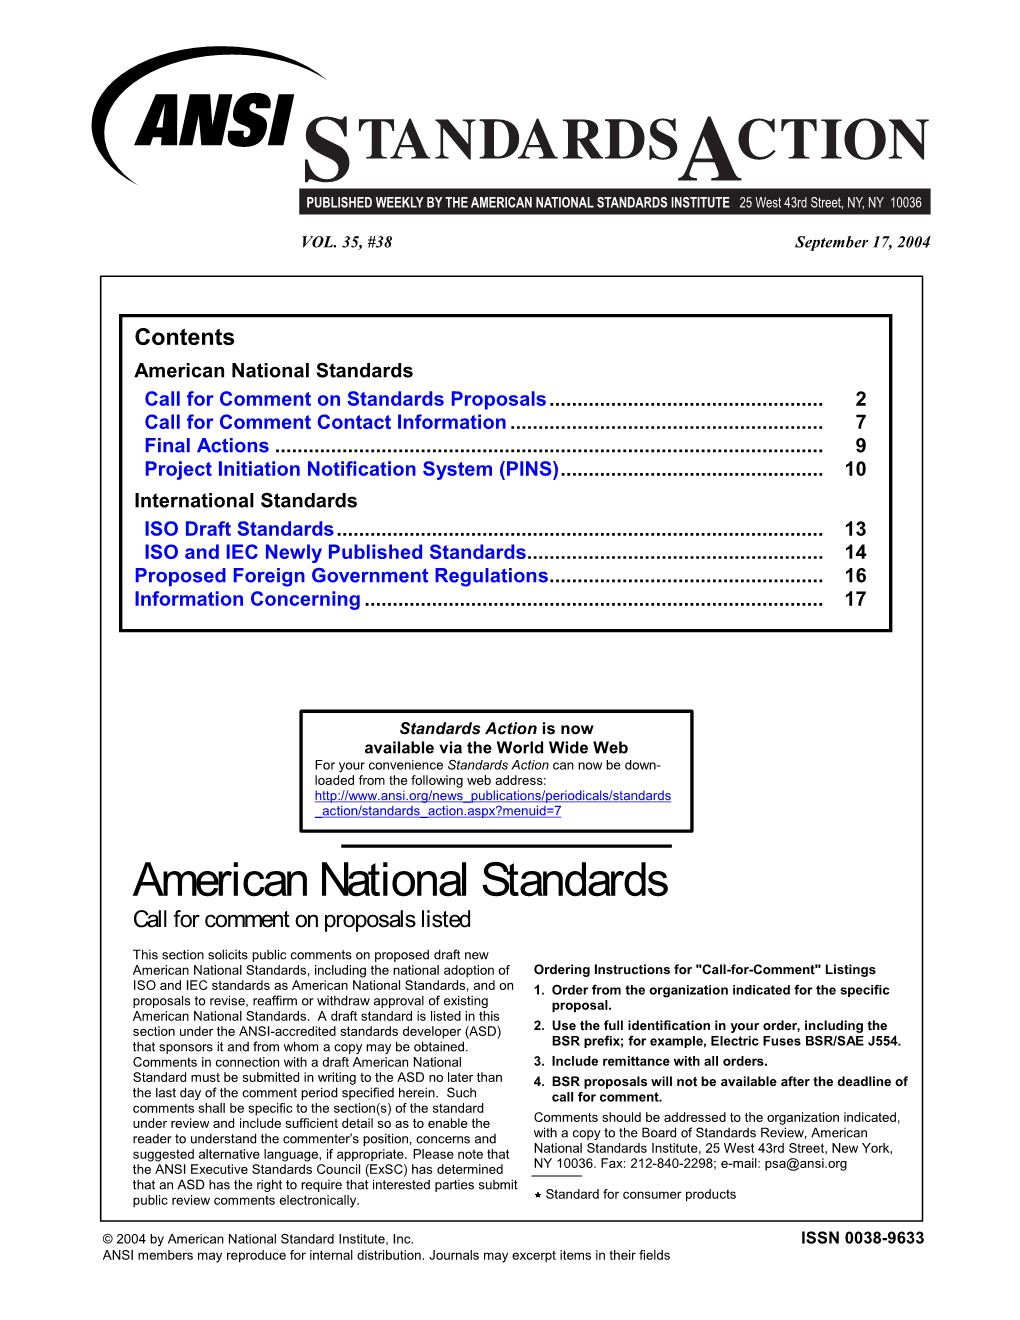 Standards Action Layout SAV3538.Fp5